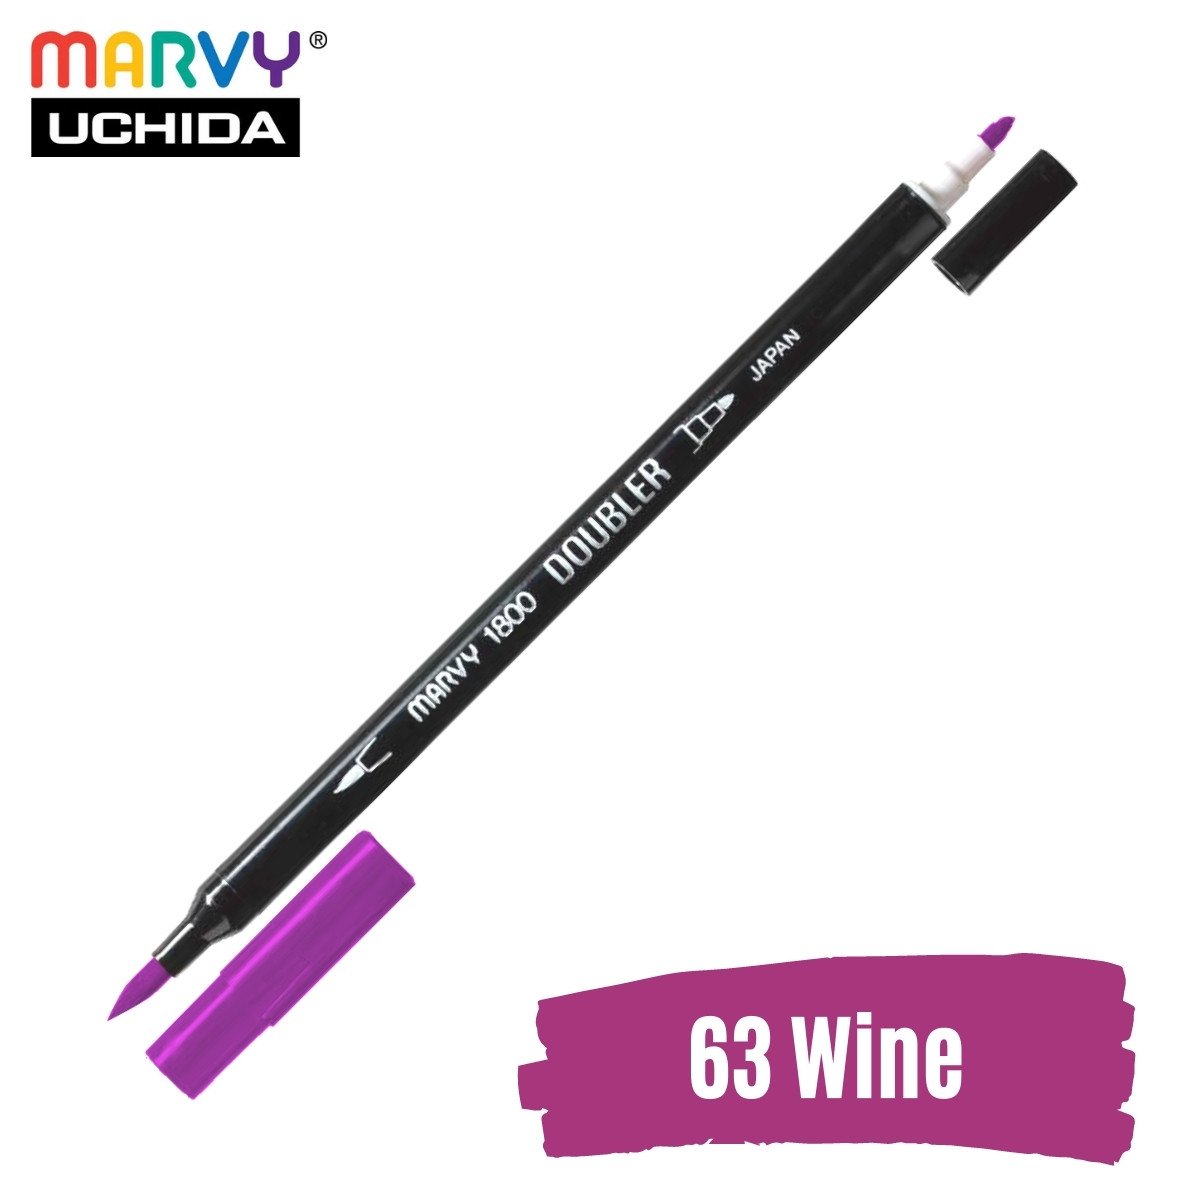 Marvy Artist Brush Pen 1800 Çift Taraflı Firça Uçlu Kalem 63 Wine